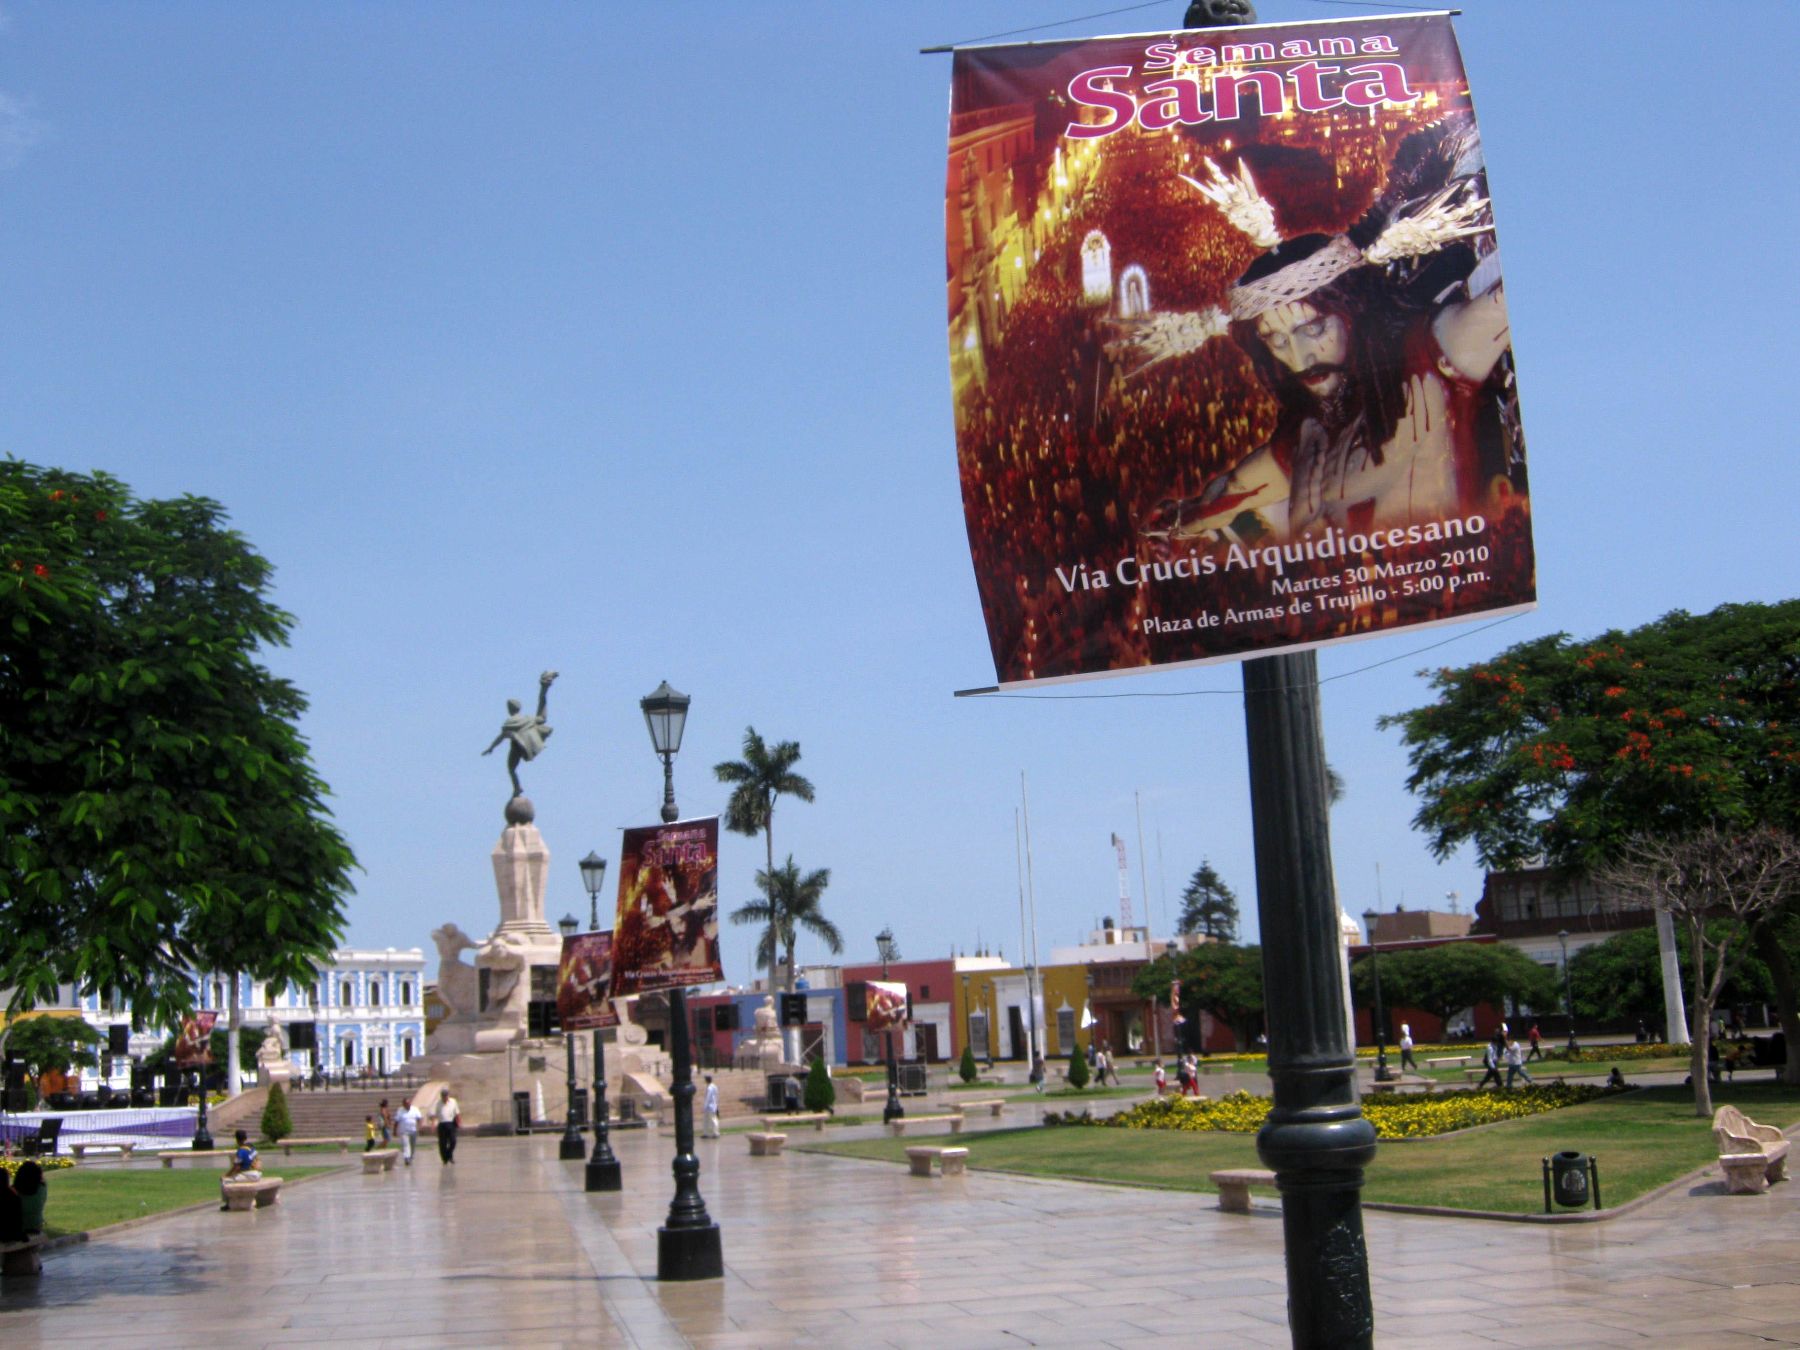 Plaza de armas de Trujillo será escenario del vía crucis por Semana Santa. Foto: ANDINA / Oscar Paz.